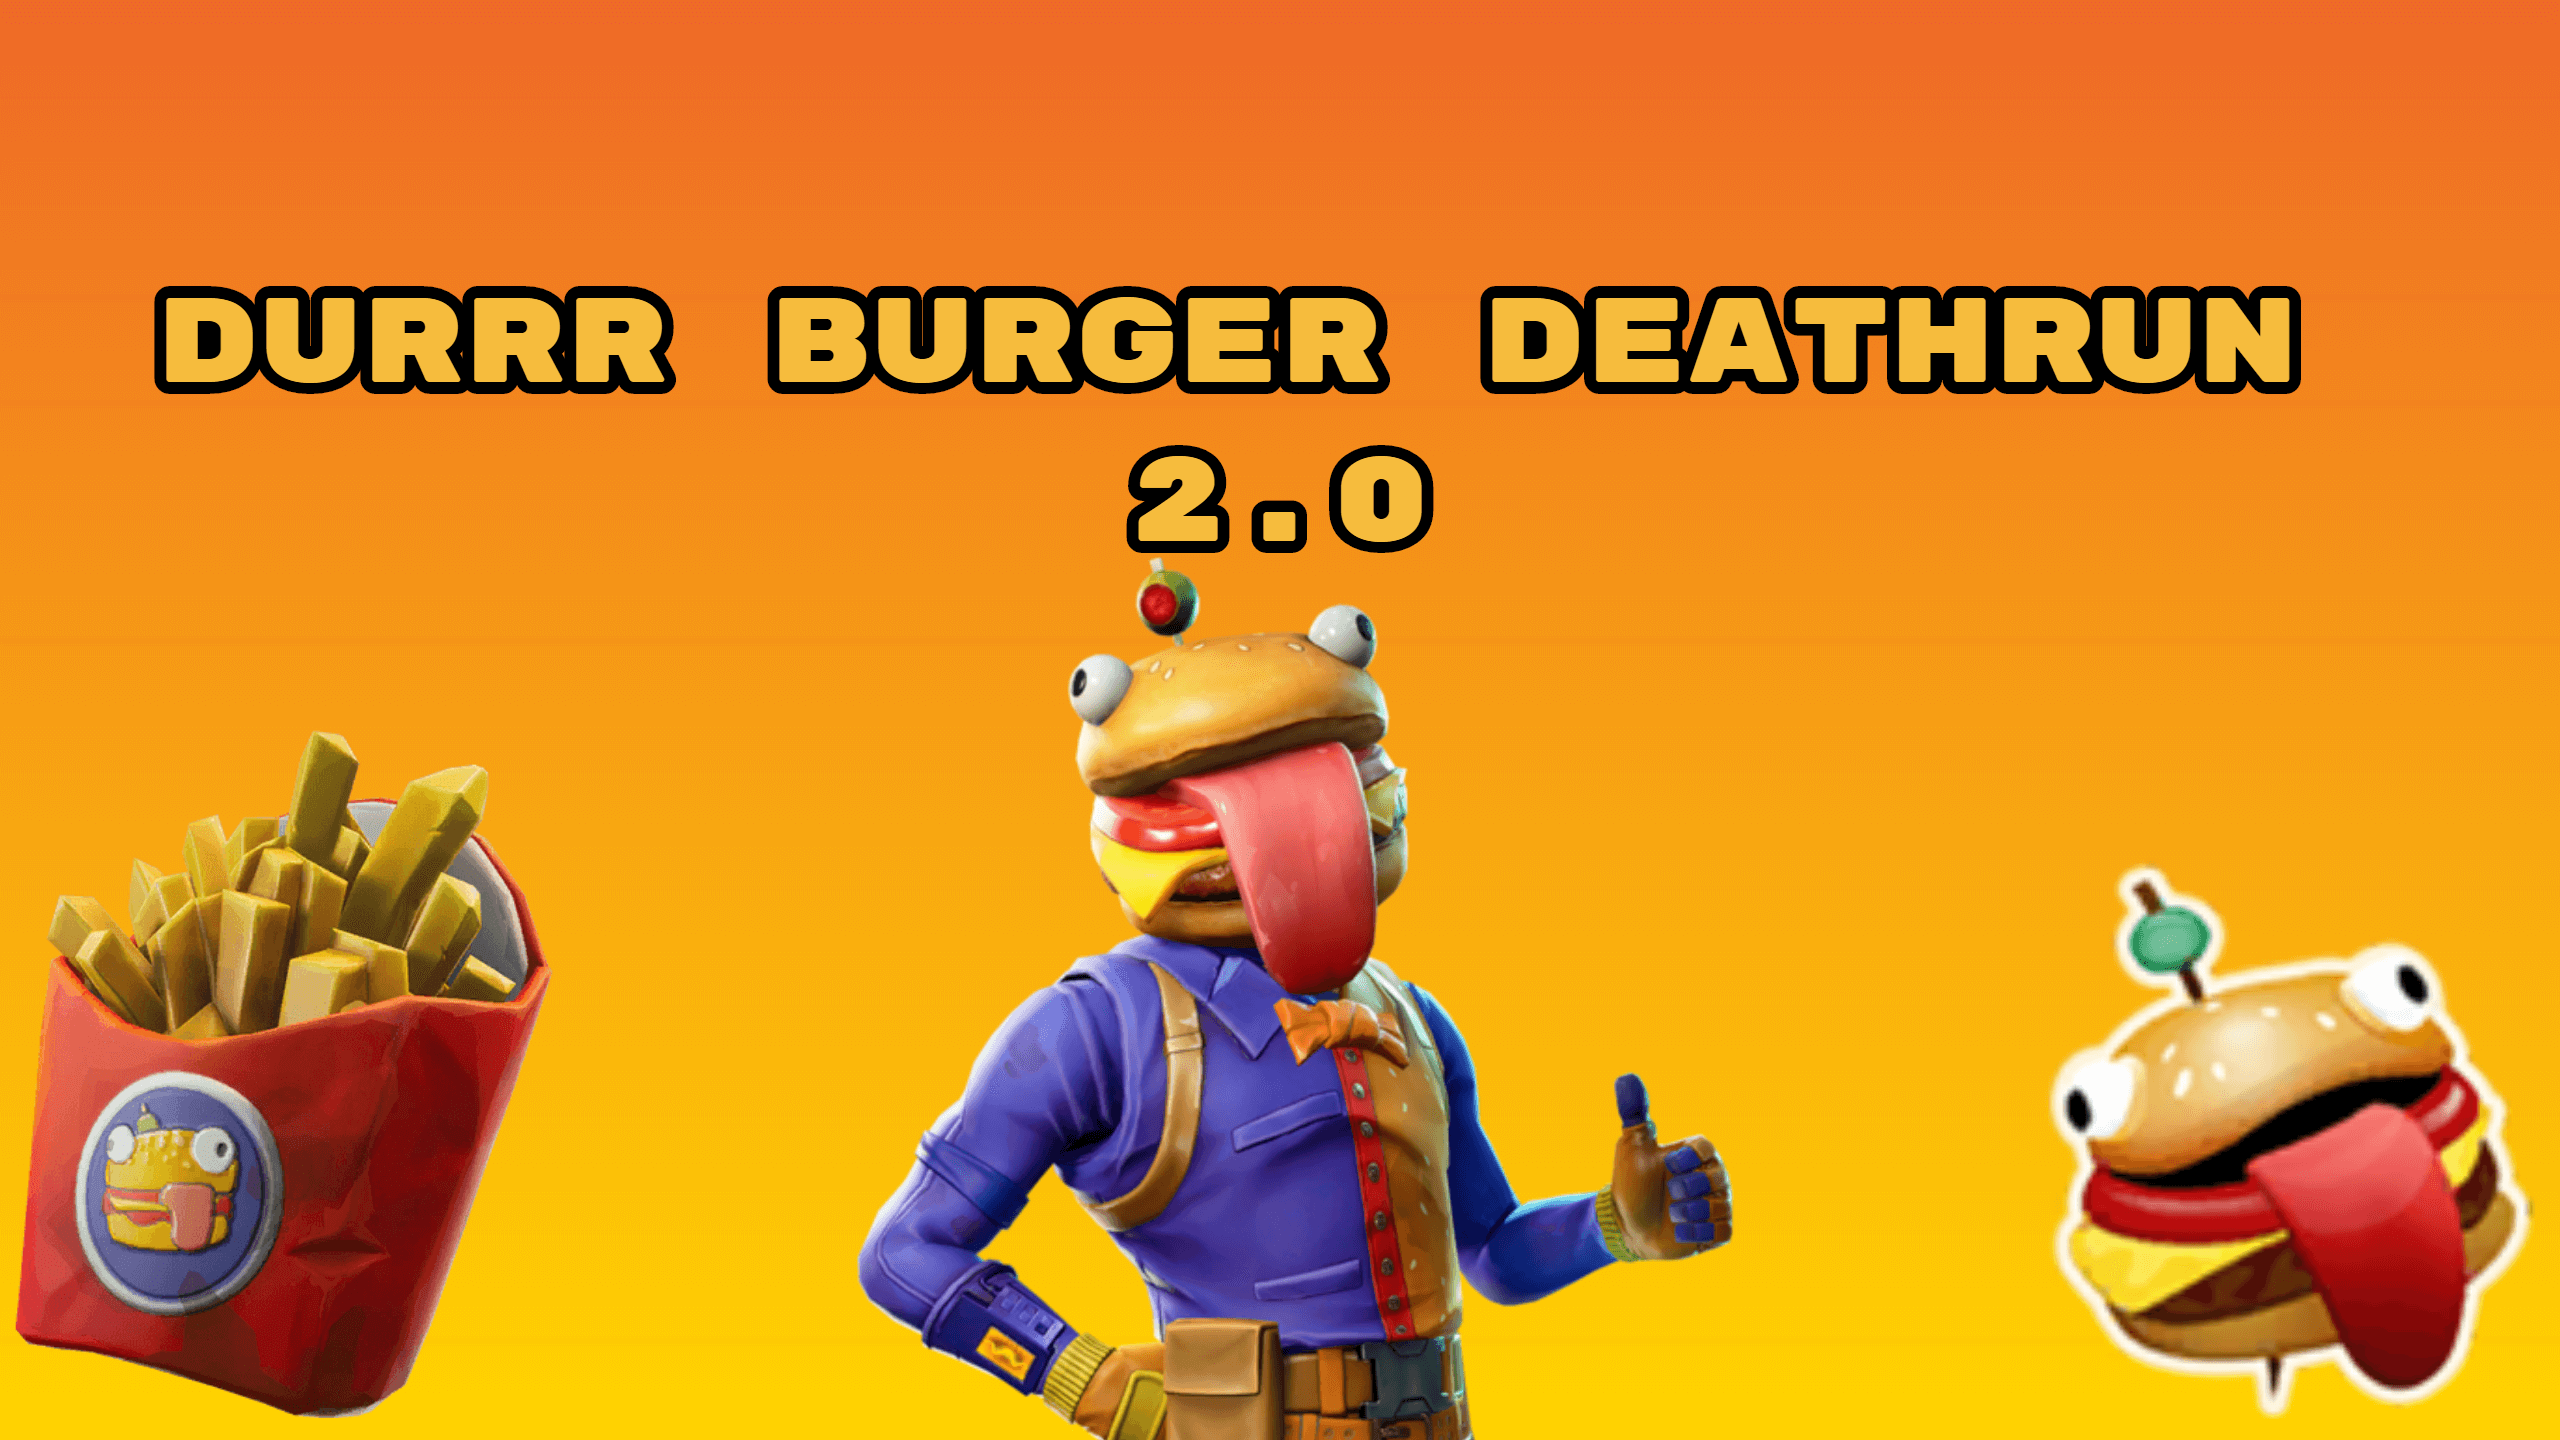 DURRR BURGER DEATHRUN 2.0